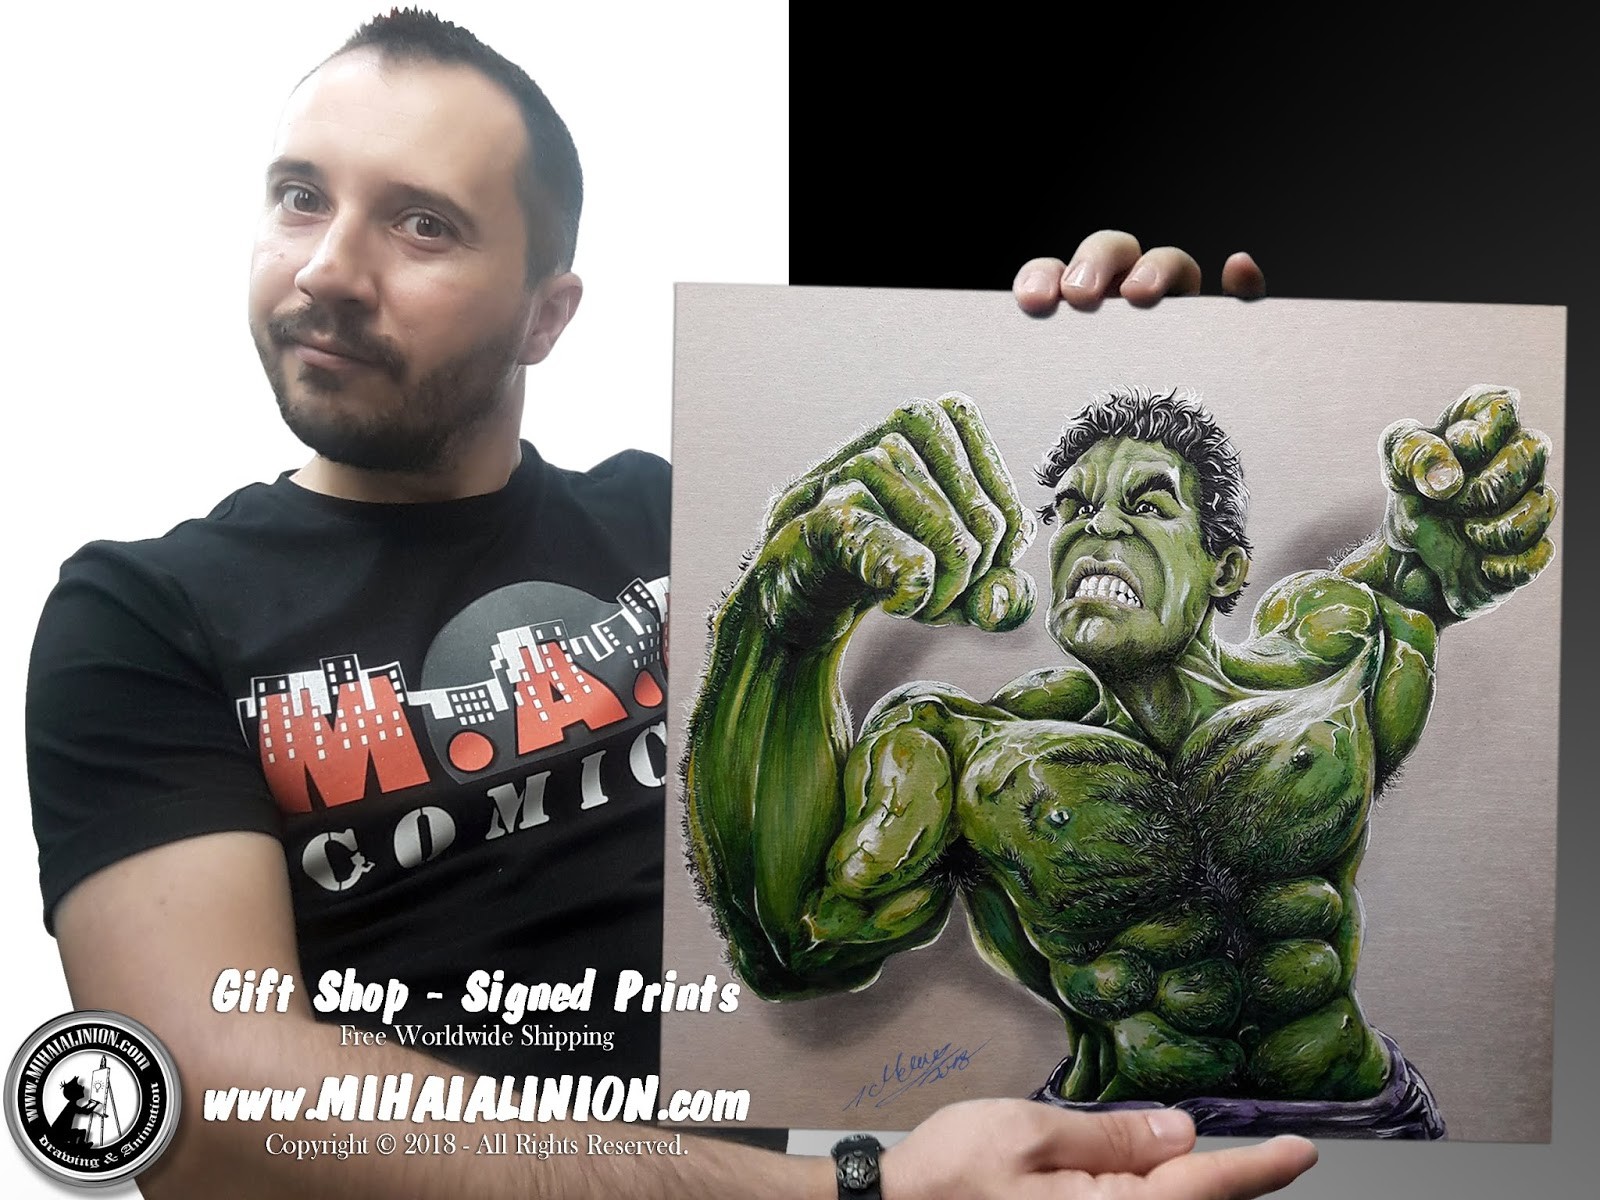 Drawing The Incredible Hulk - Bruce Banner - Mark Ruffalo inspired - Realistic 3D Comics Art